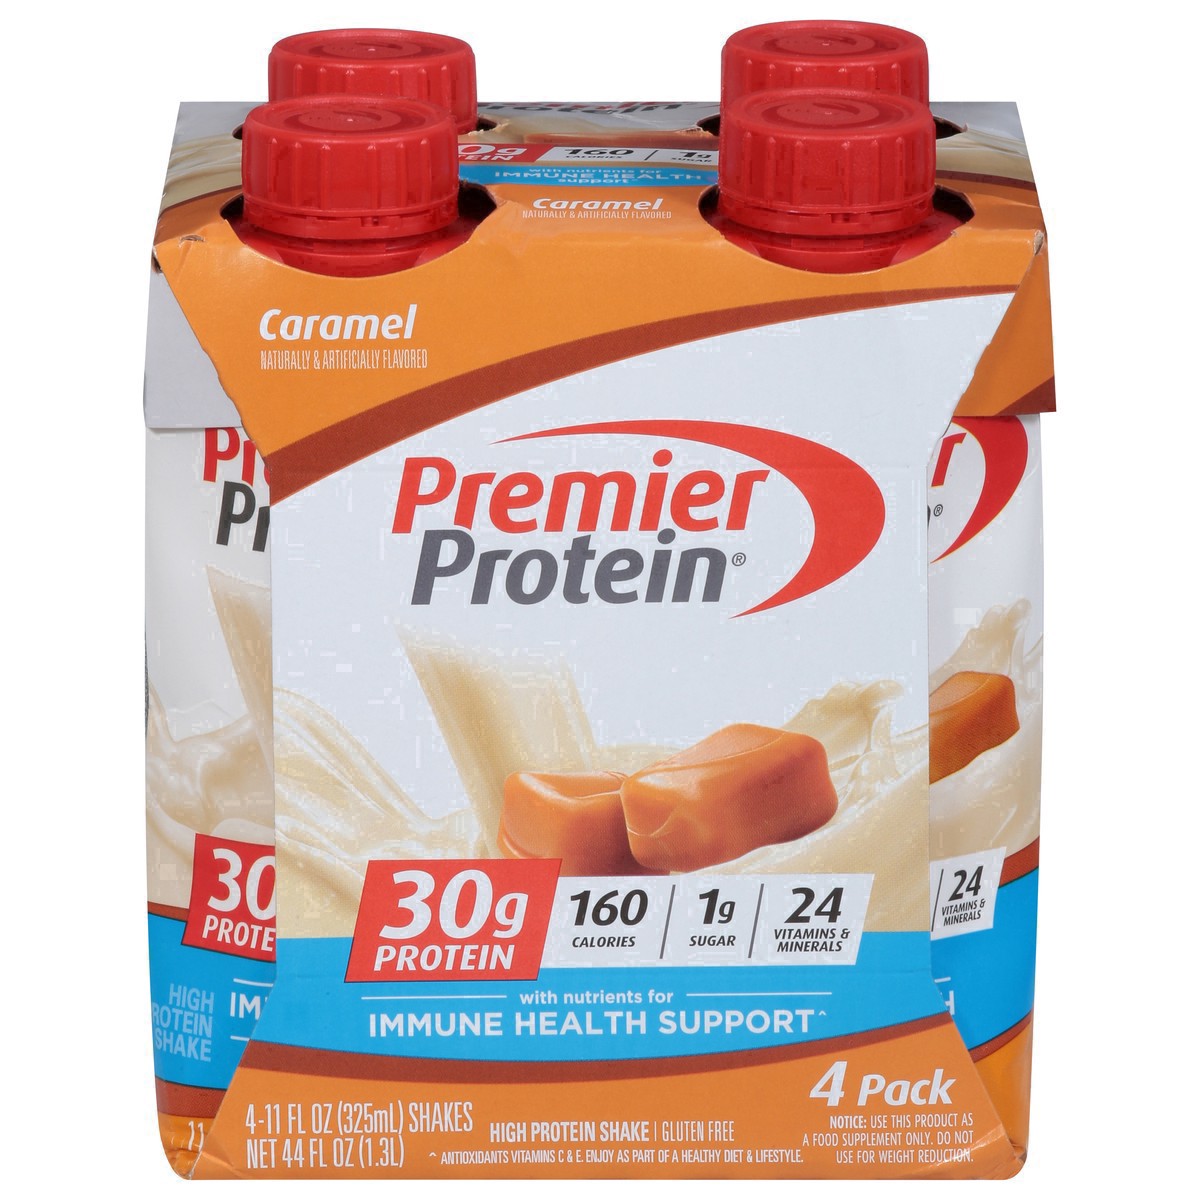 slide 26 of 61, Premier Protein Caramel Shakes, 4 ct; 11 fl oz